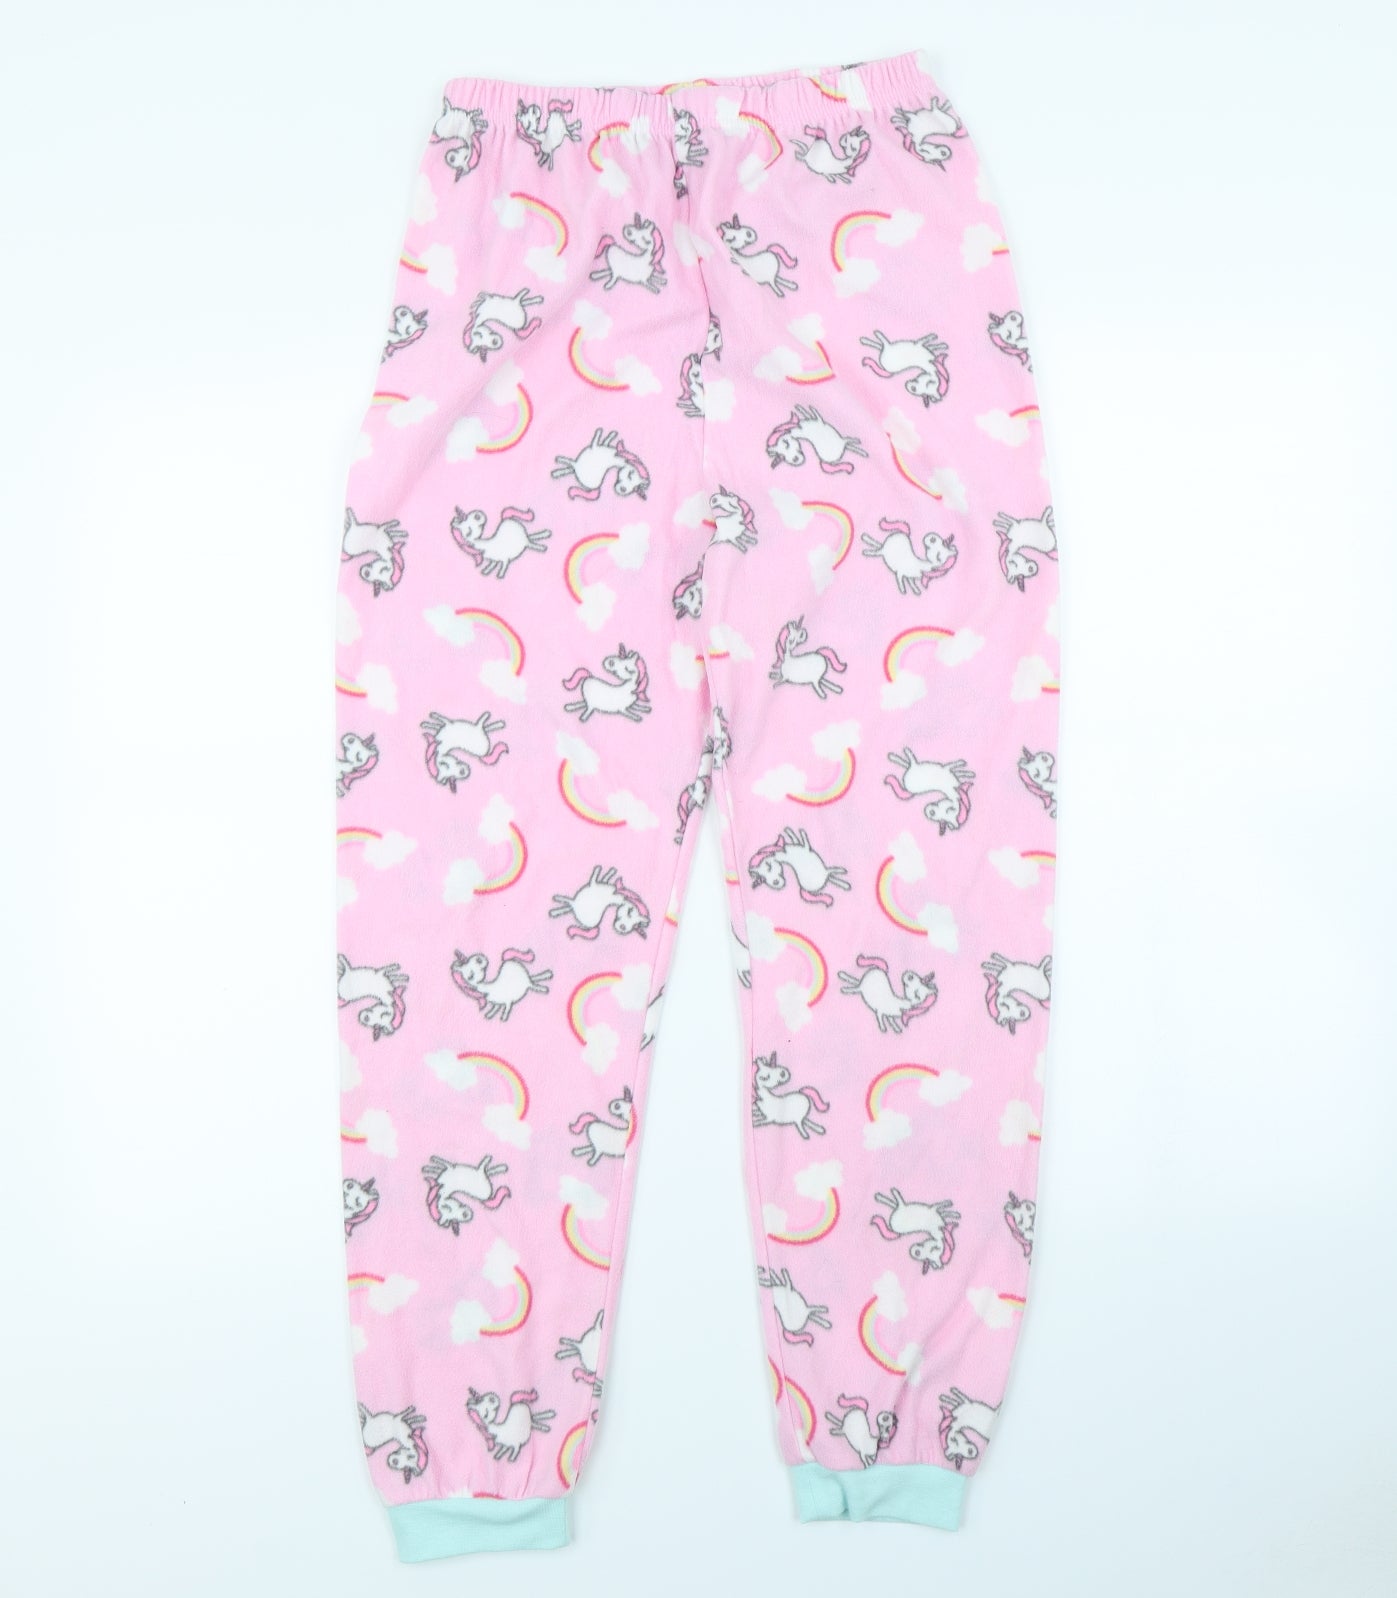 Primark Girls Pink Spotted   Pyjama Pants Size 13 Years  - Unicorn